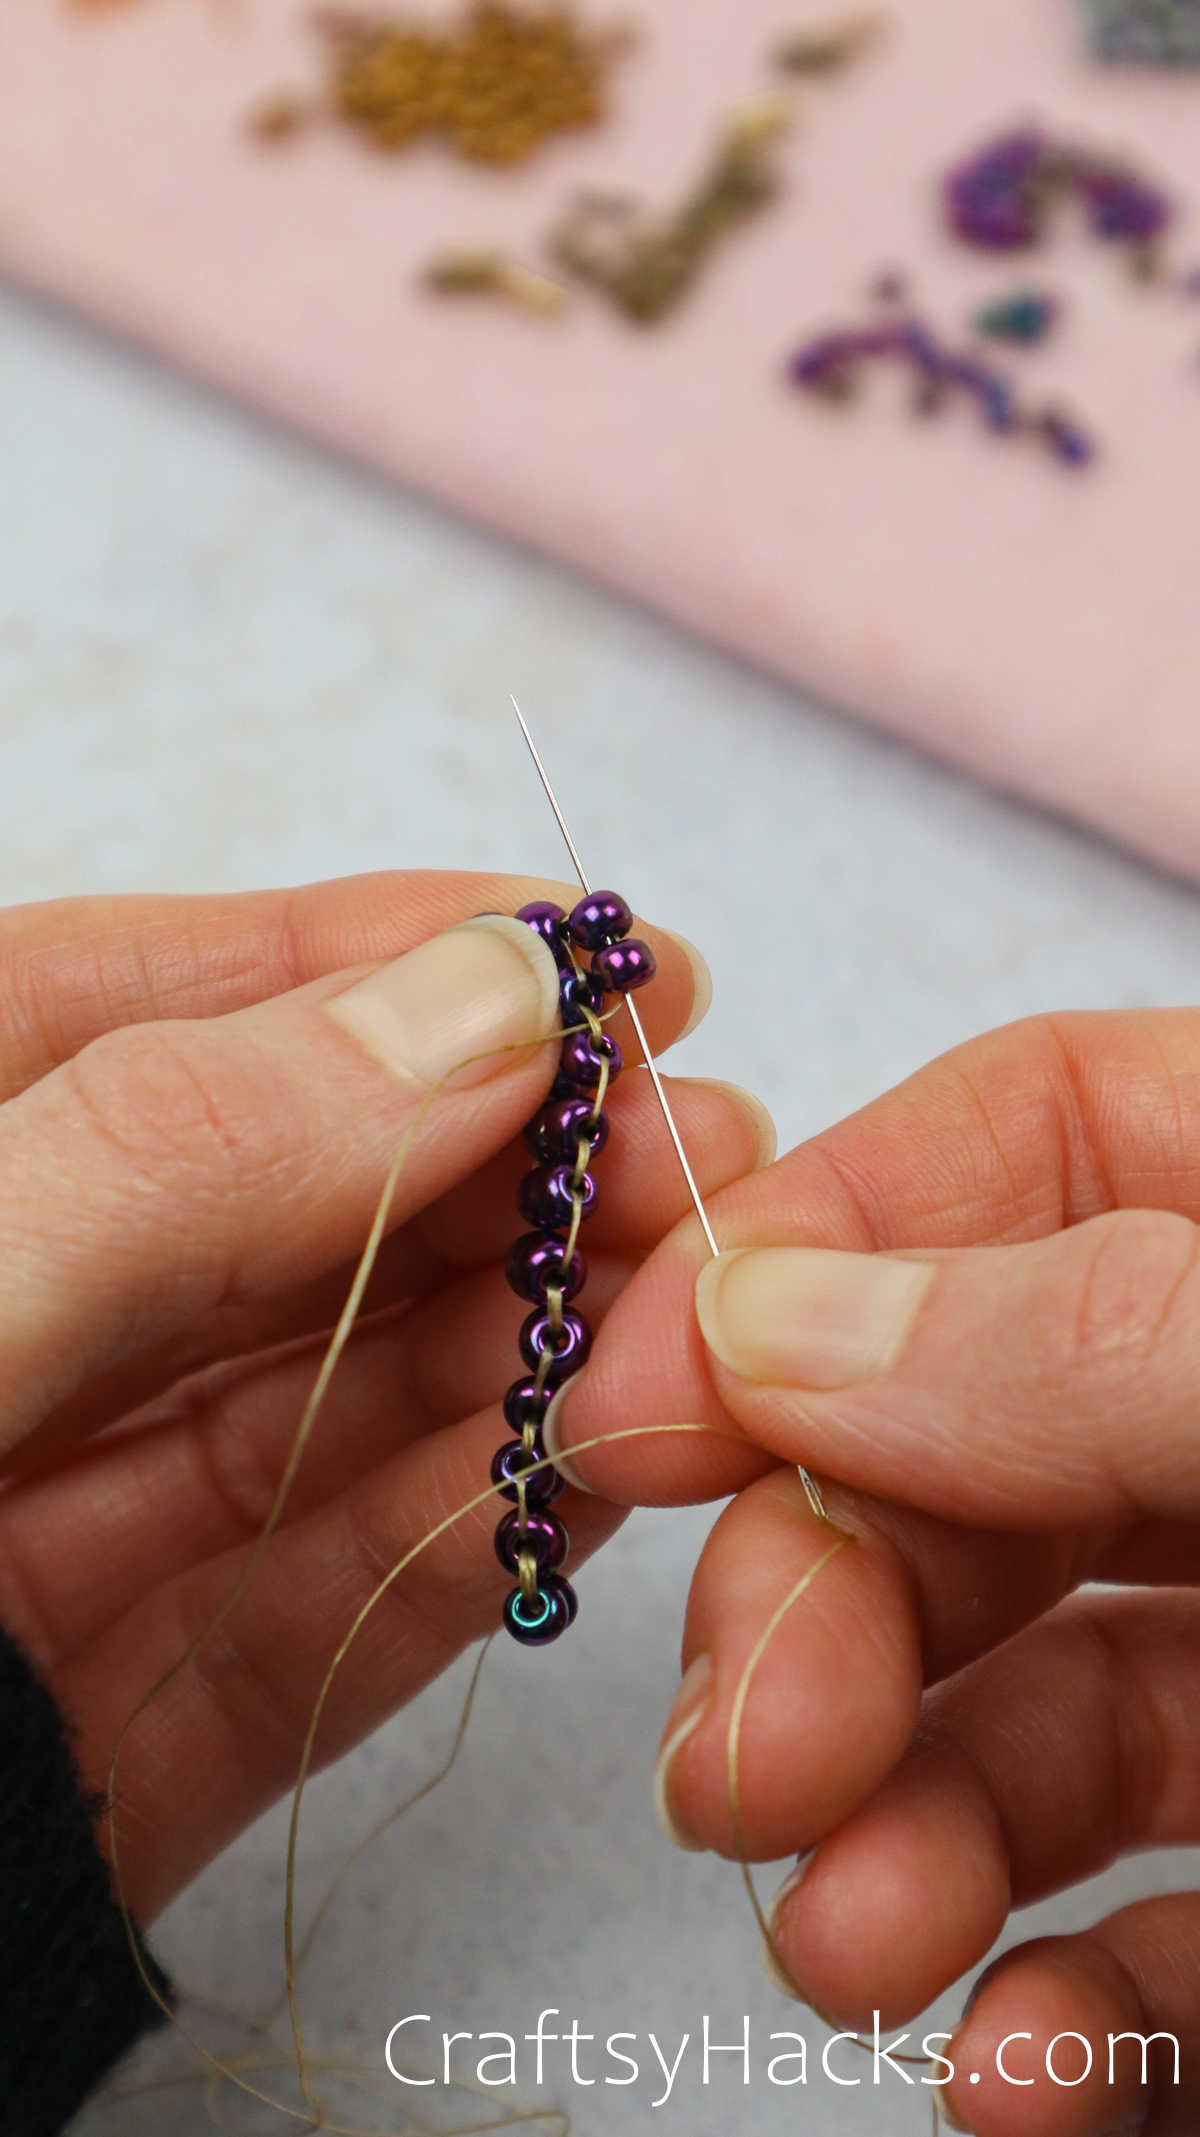 threading more beads to create a diamond shape